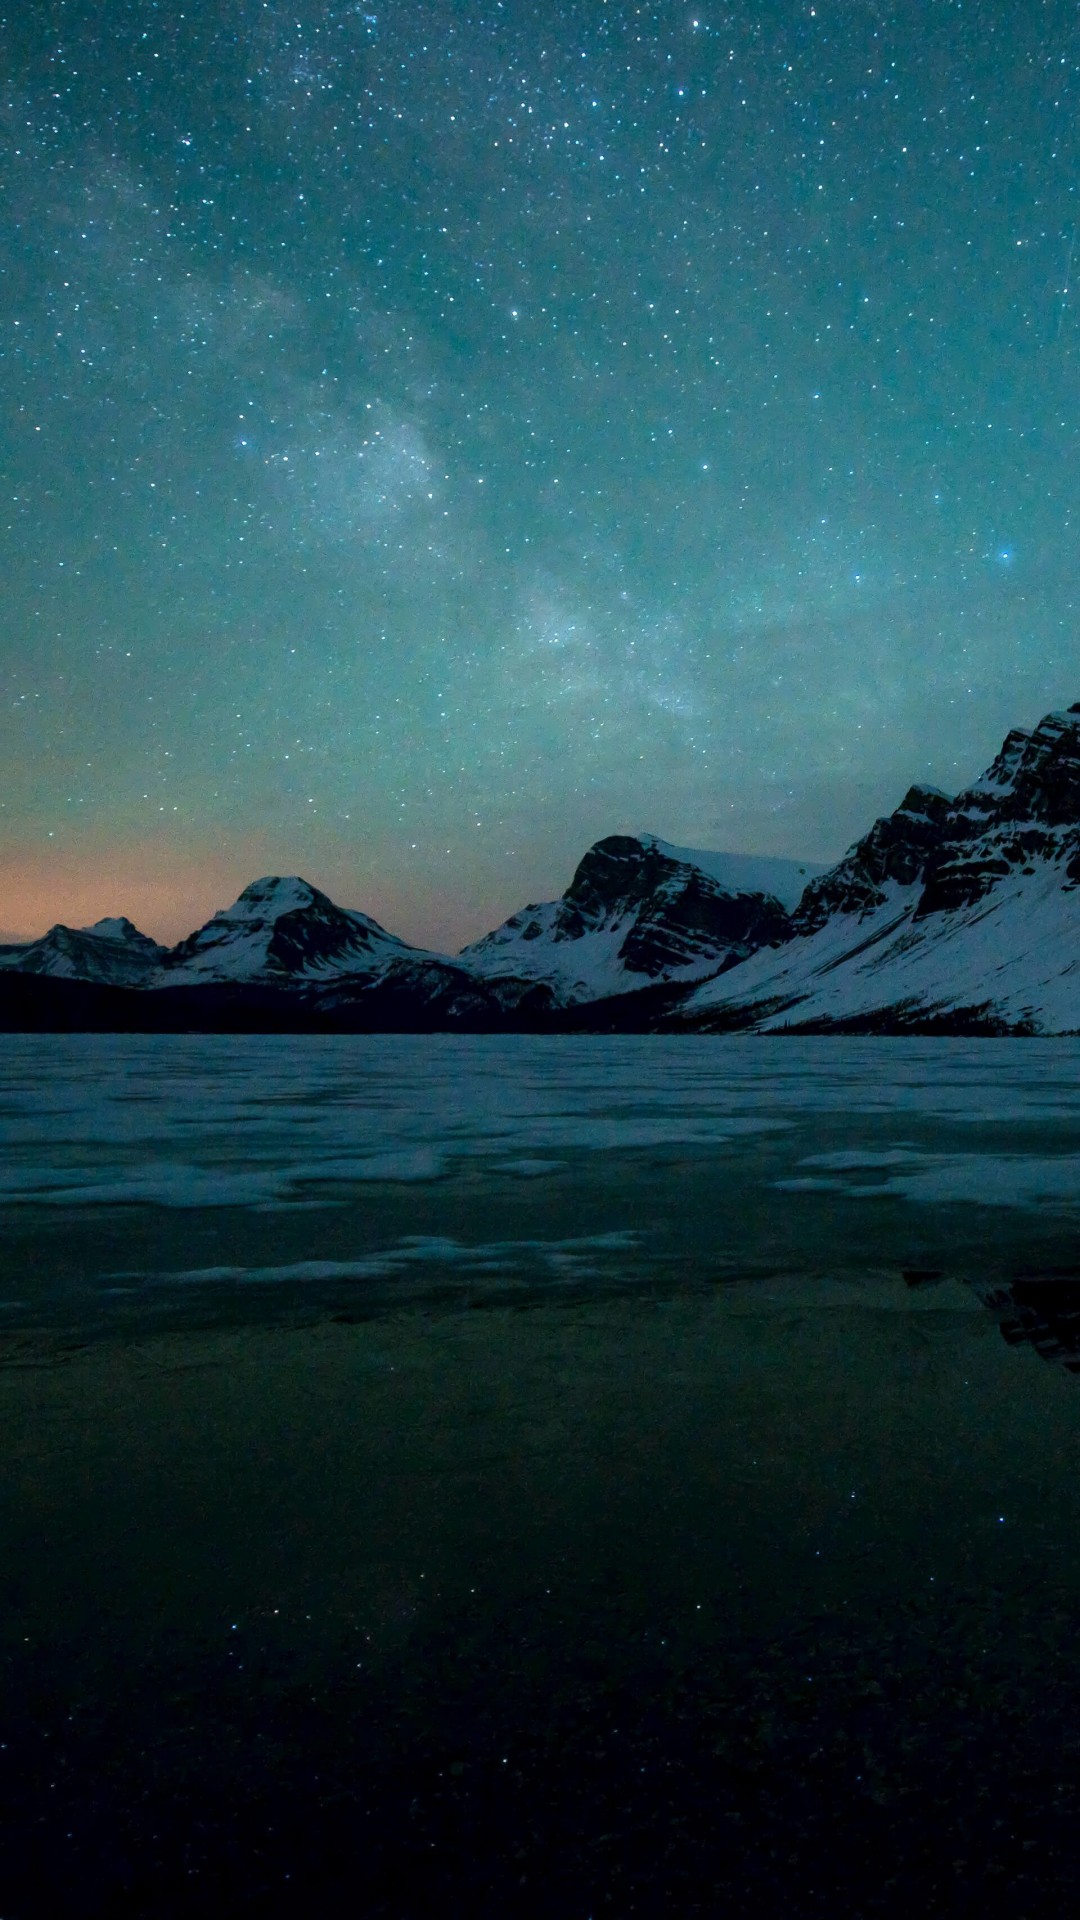 Milky Way over Bow Lake, Alberta, Canada Wallpaper for Google Nexus 5X